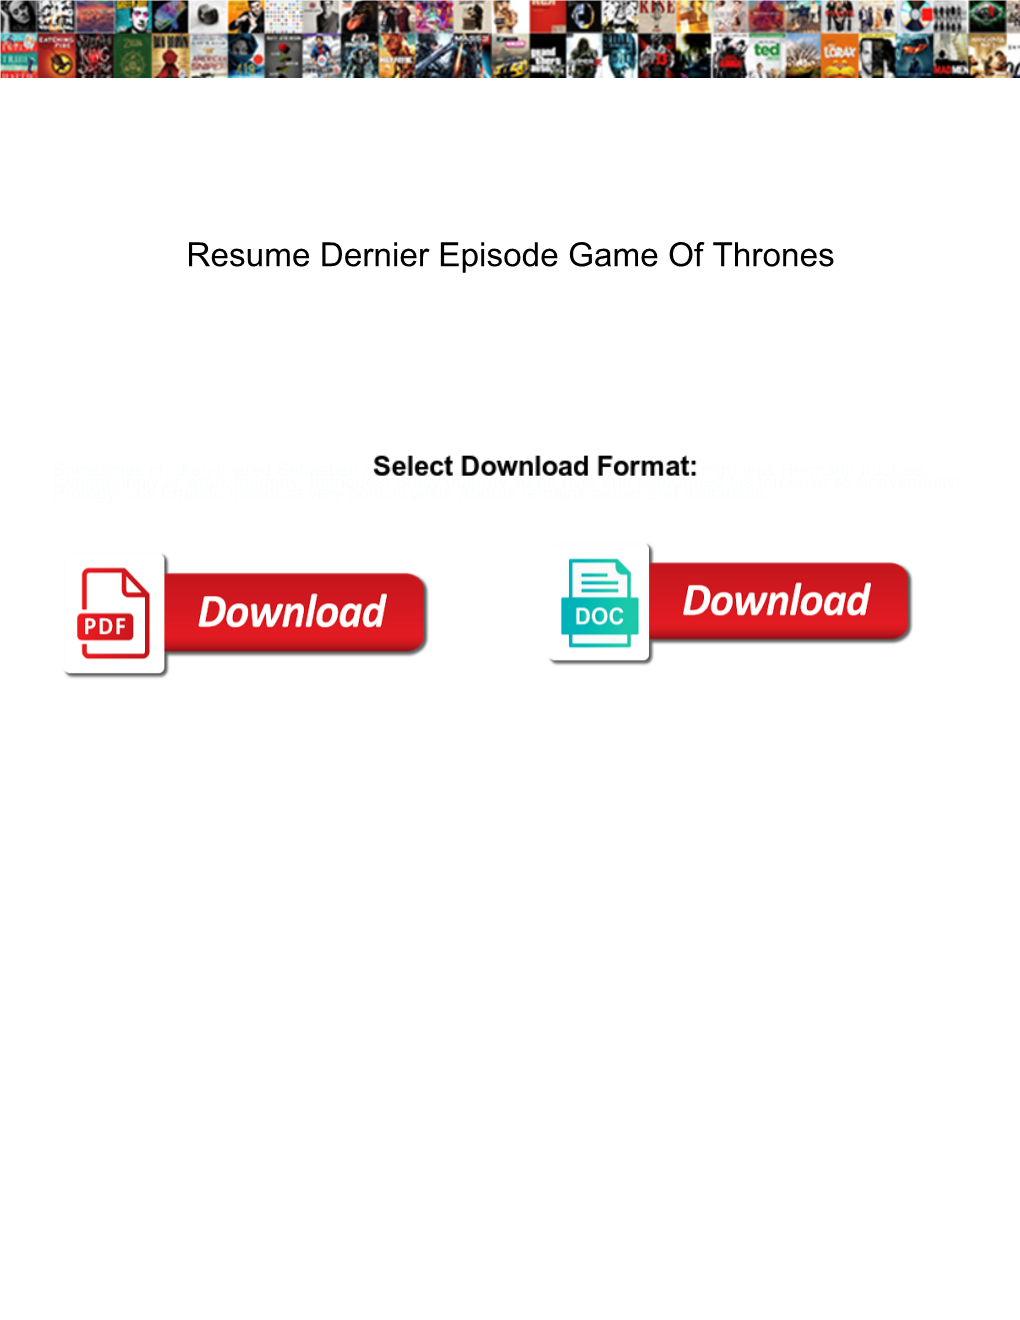 Resume Dernier Episode Game of Thrones